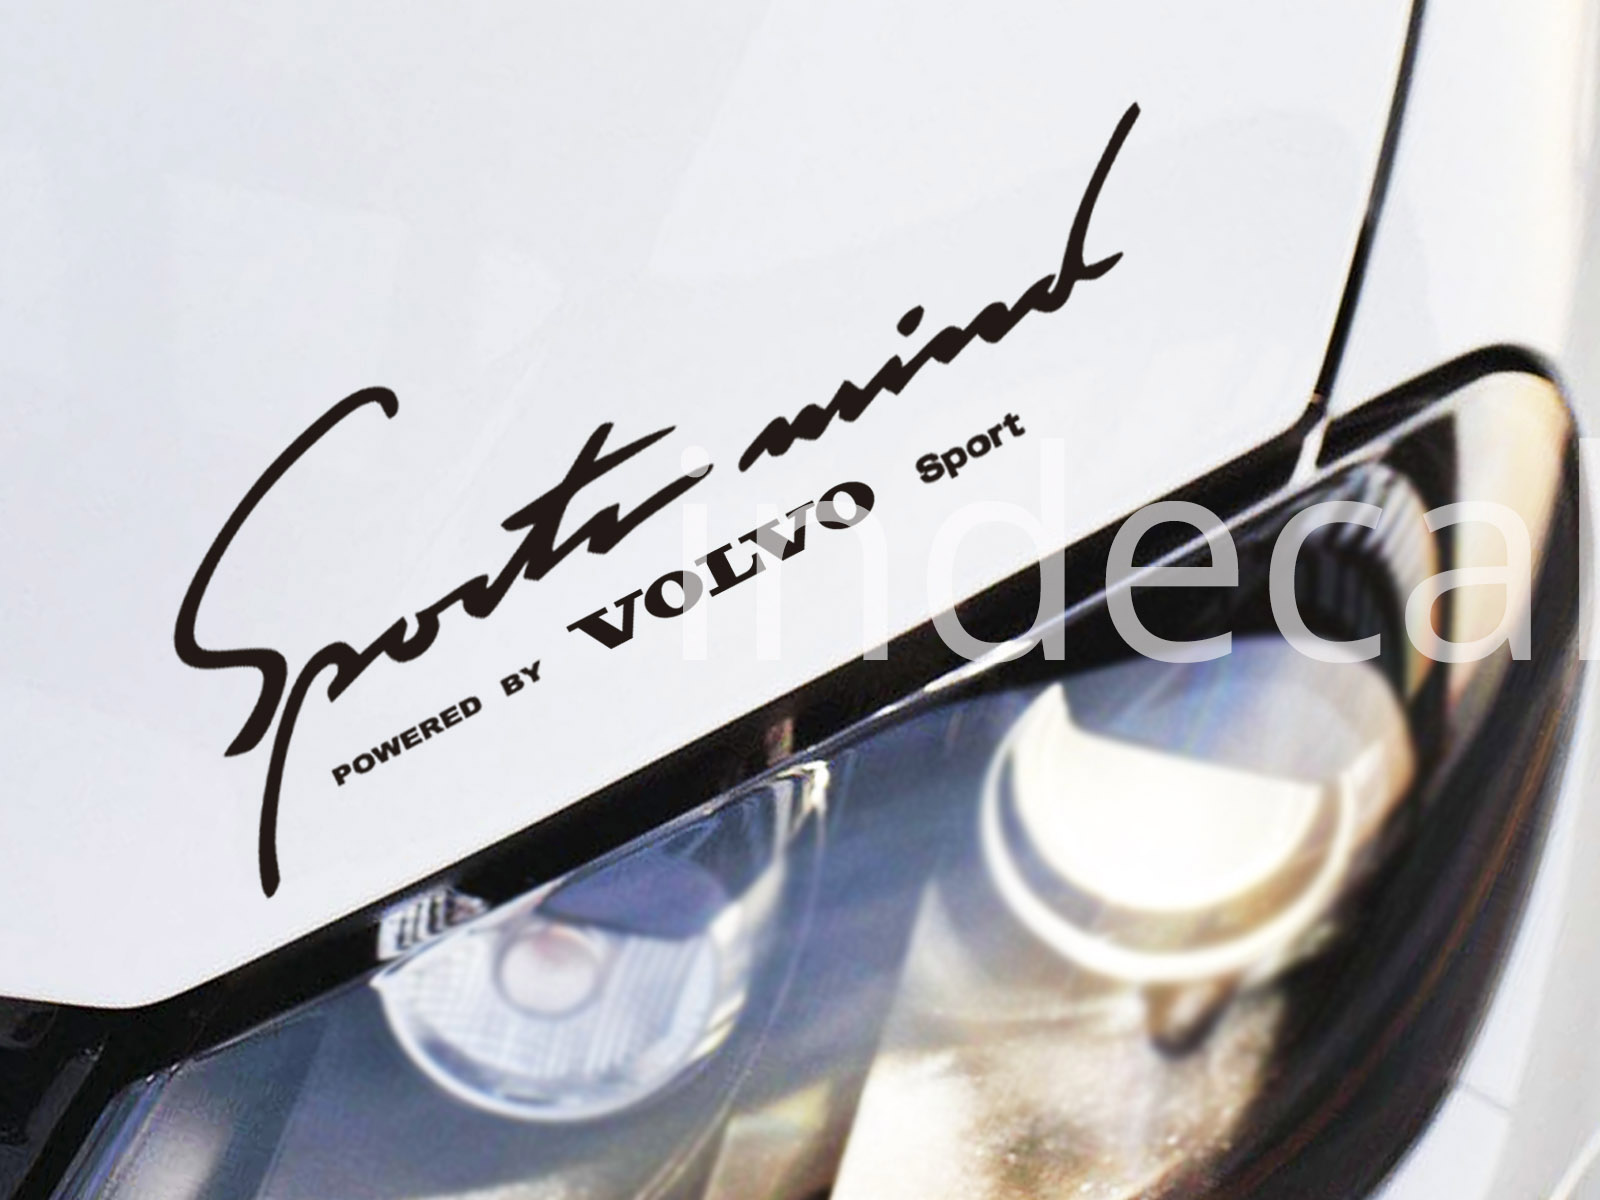 1 x Volvo Sports Mind Sticker - Black